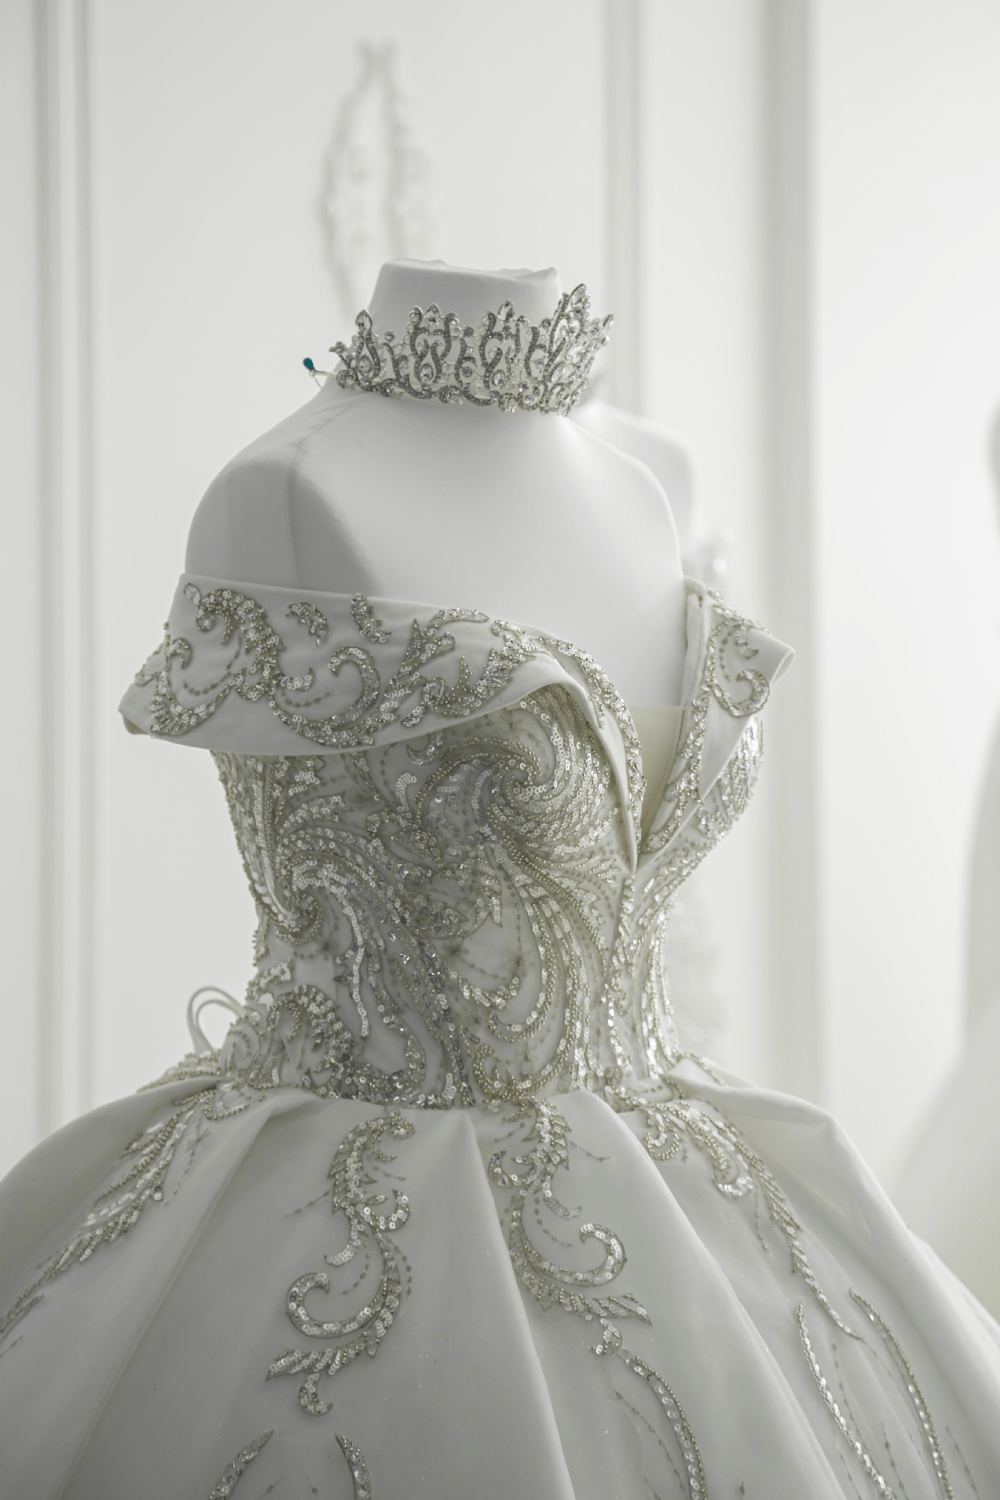 Empire Waist Wedding Dresses